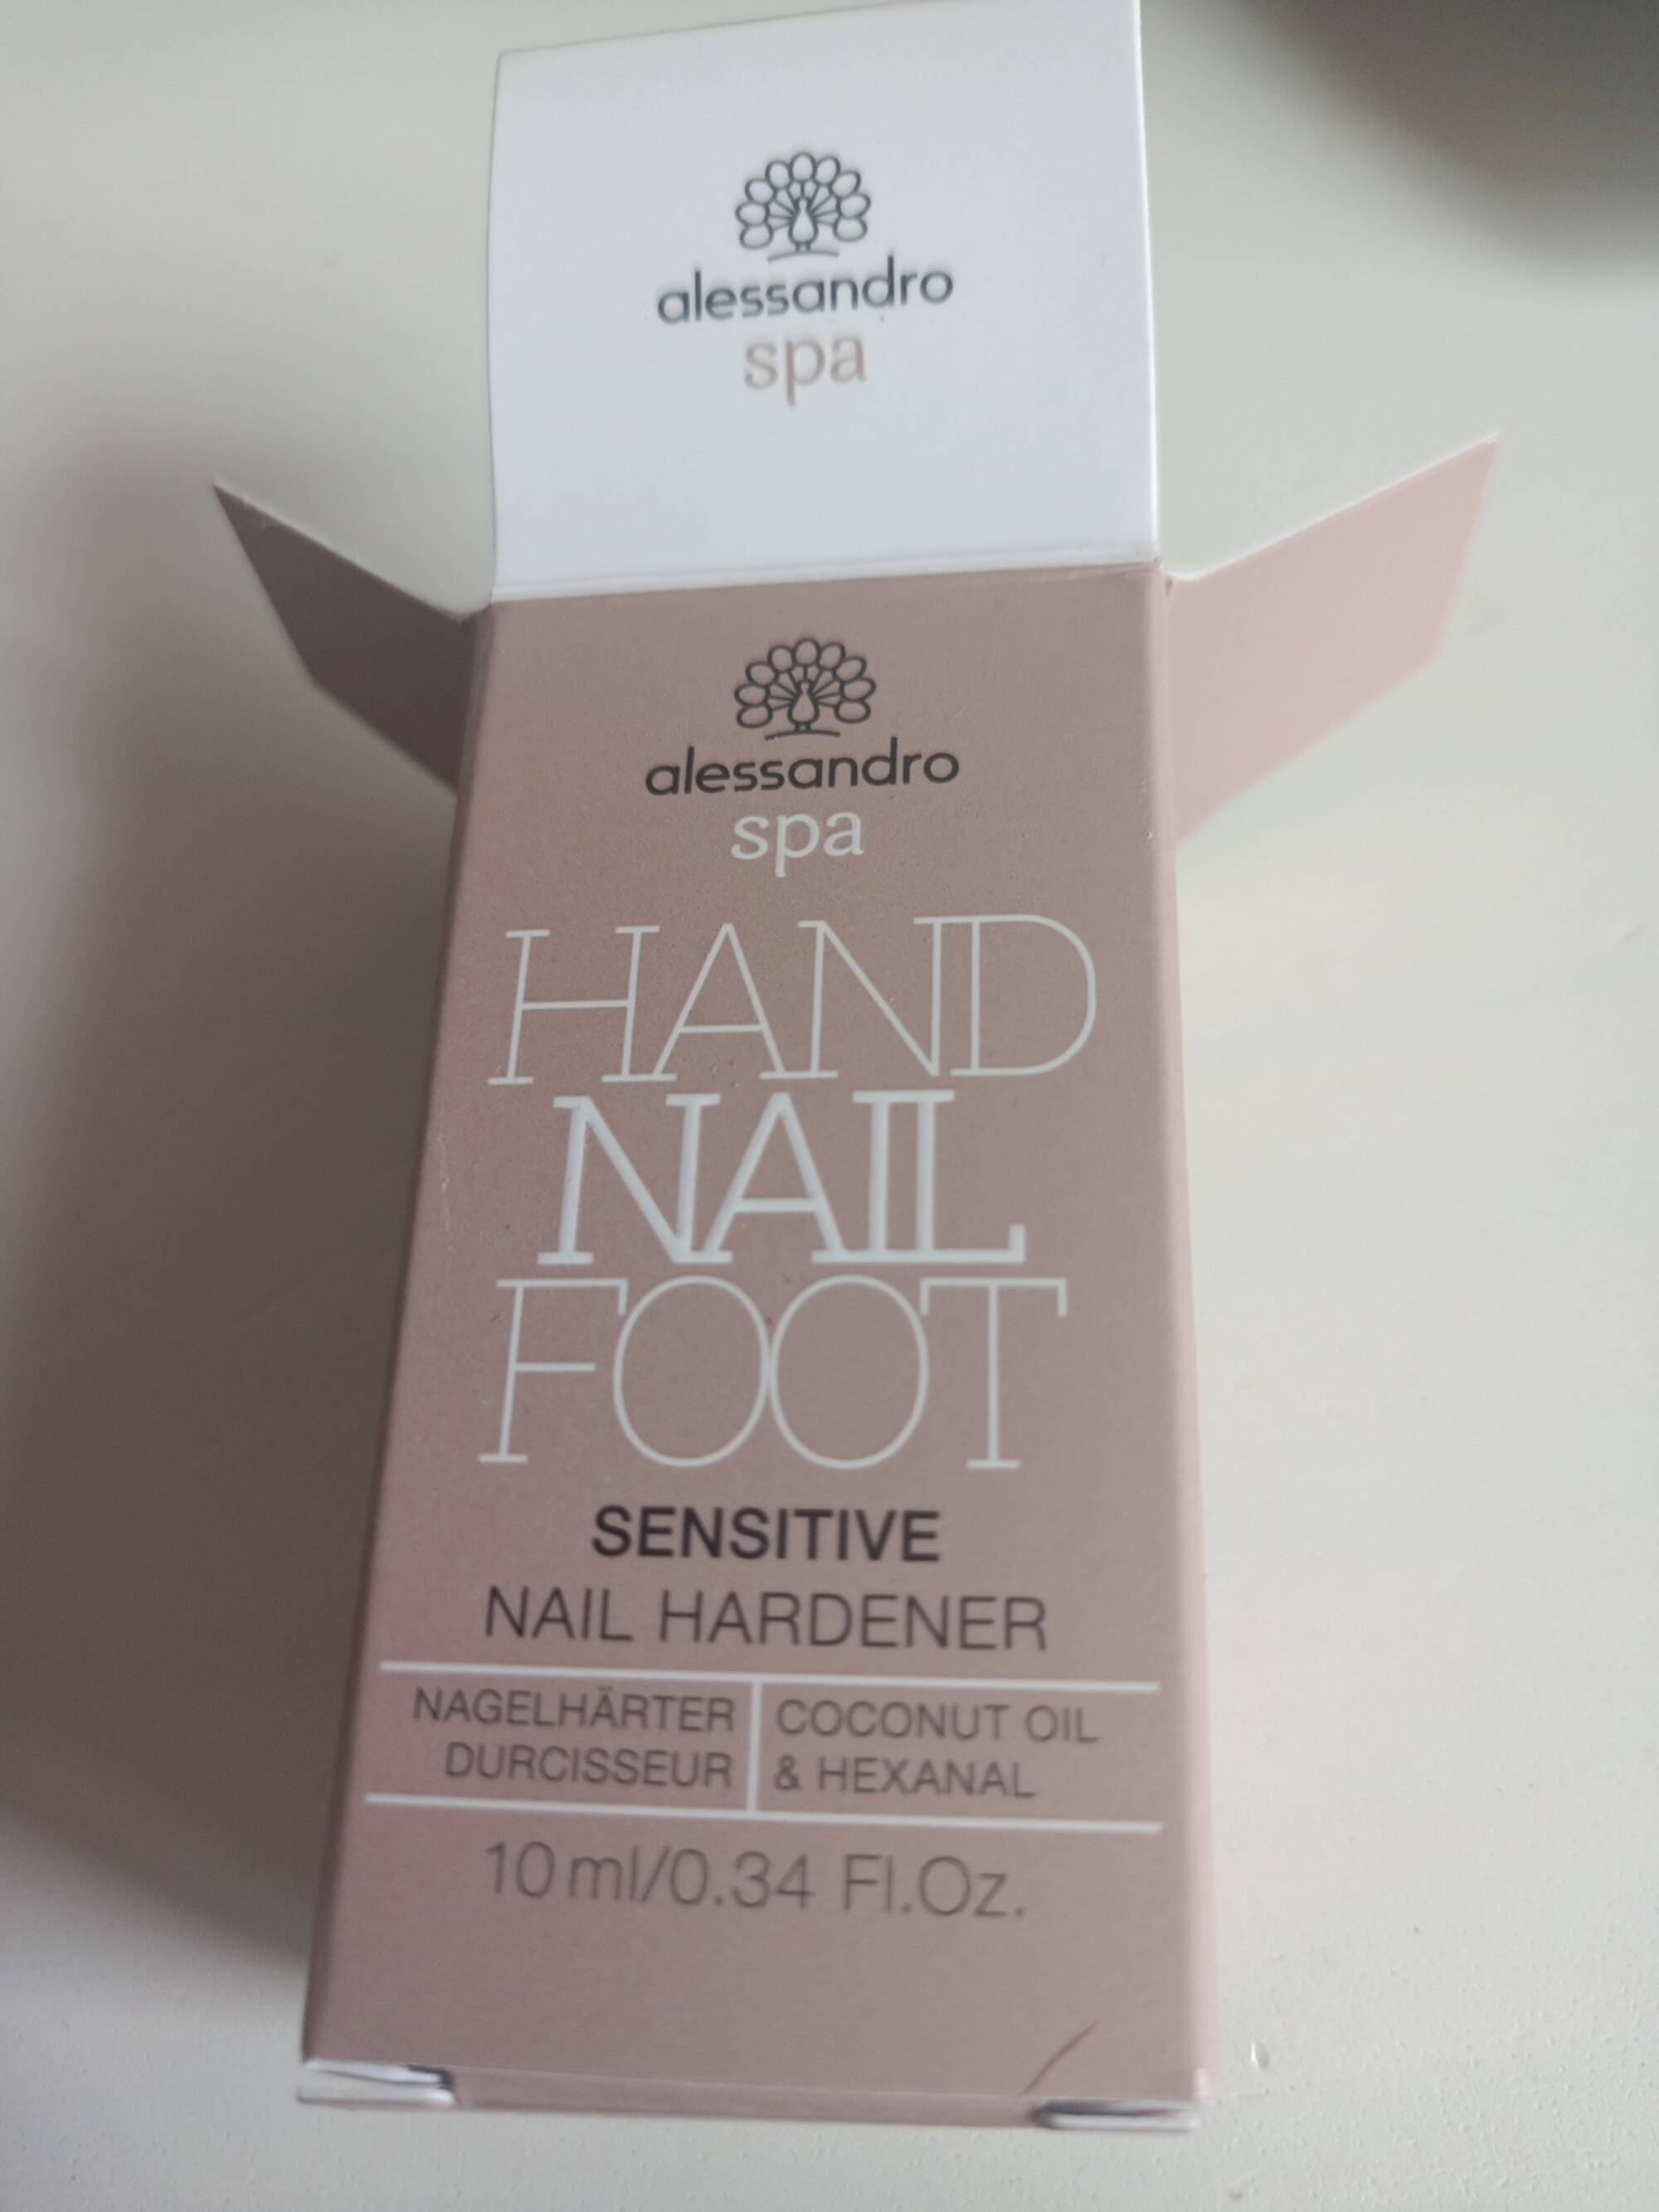 ALESSANDRO - Nail hardener sensitive for hand, nail, foot